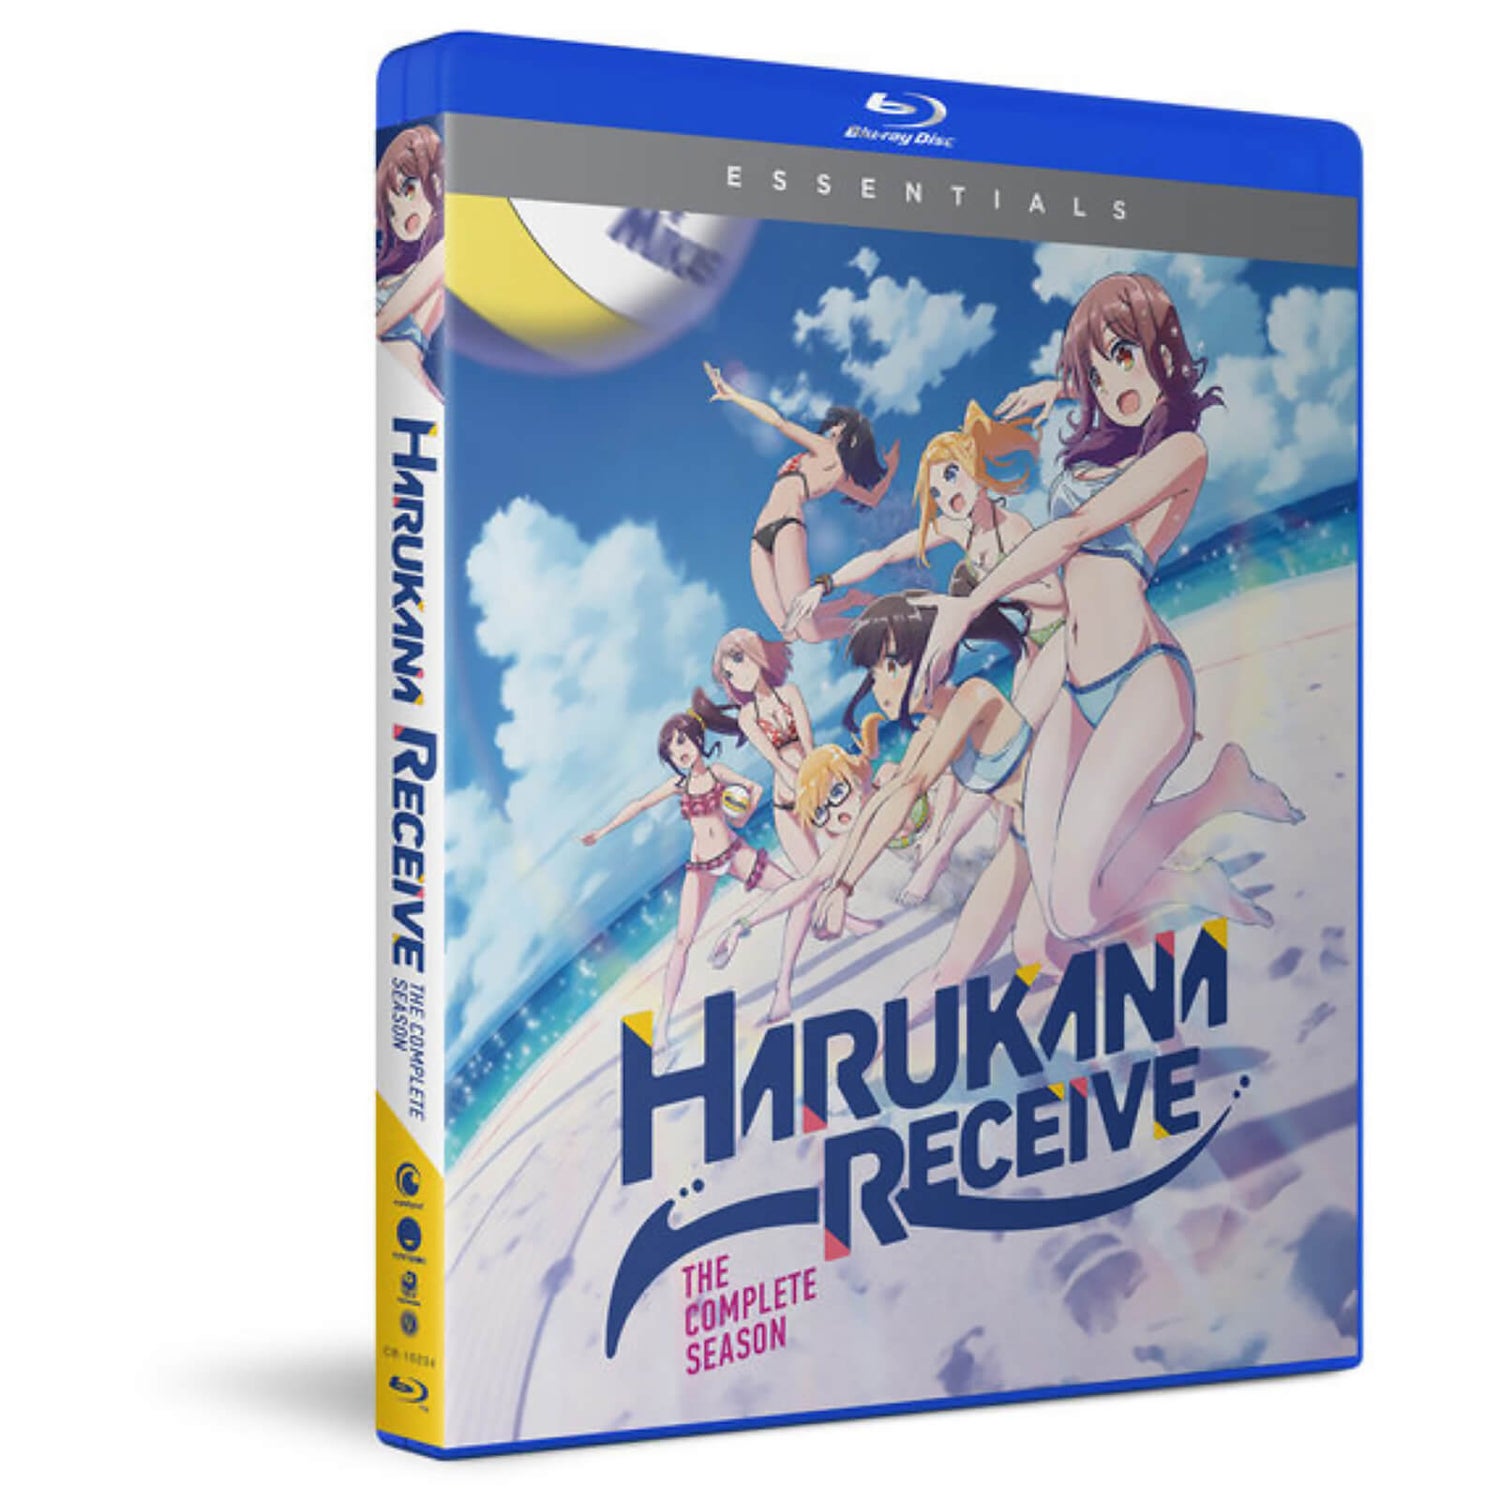 Harukana Receive: The Complete Season (Essentials) Blu-ray - Zavvi US